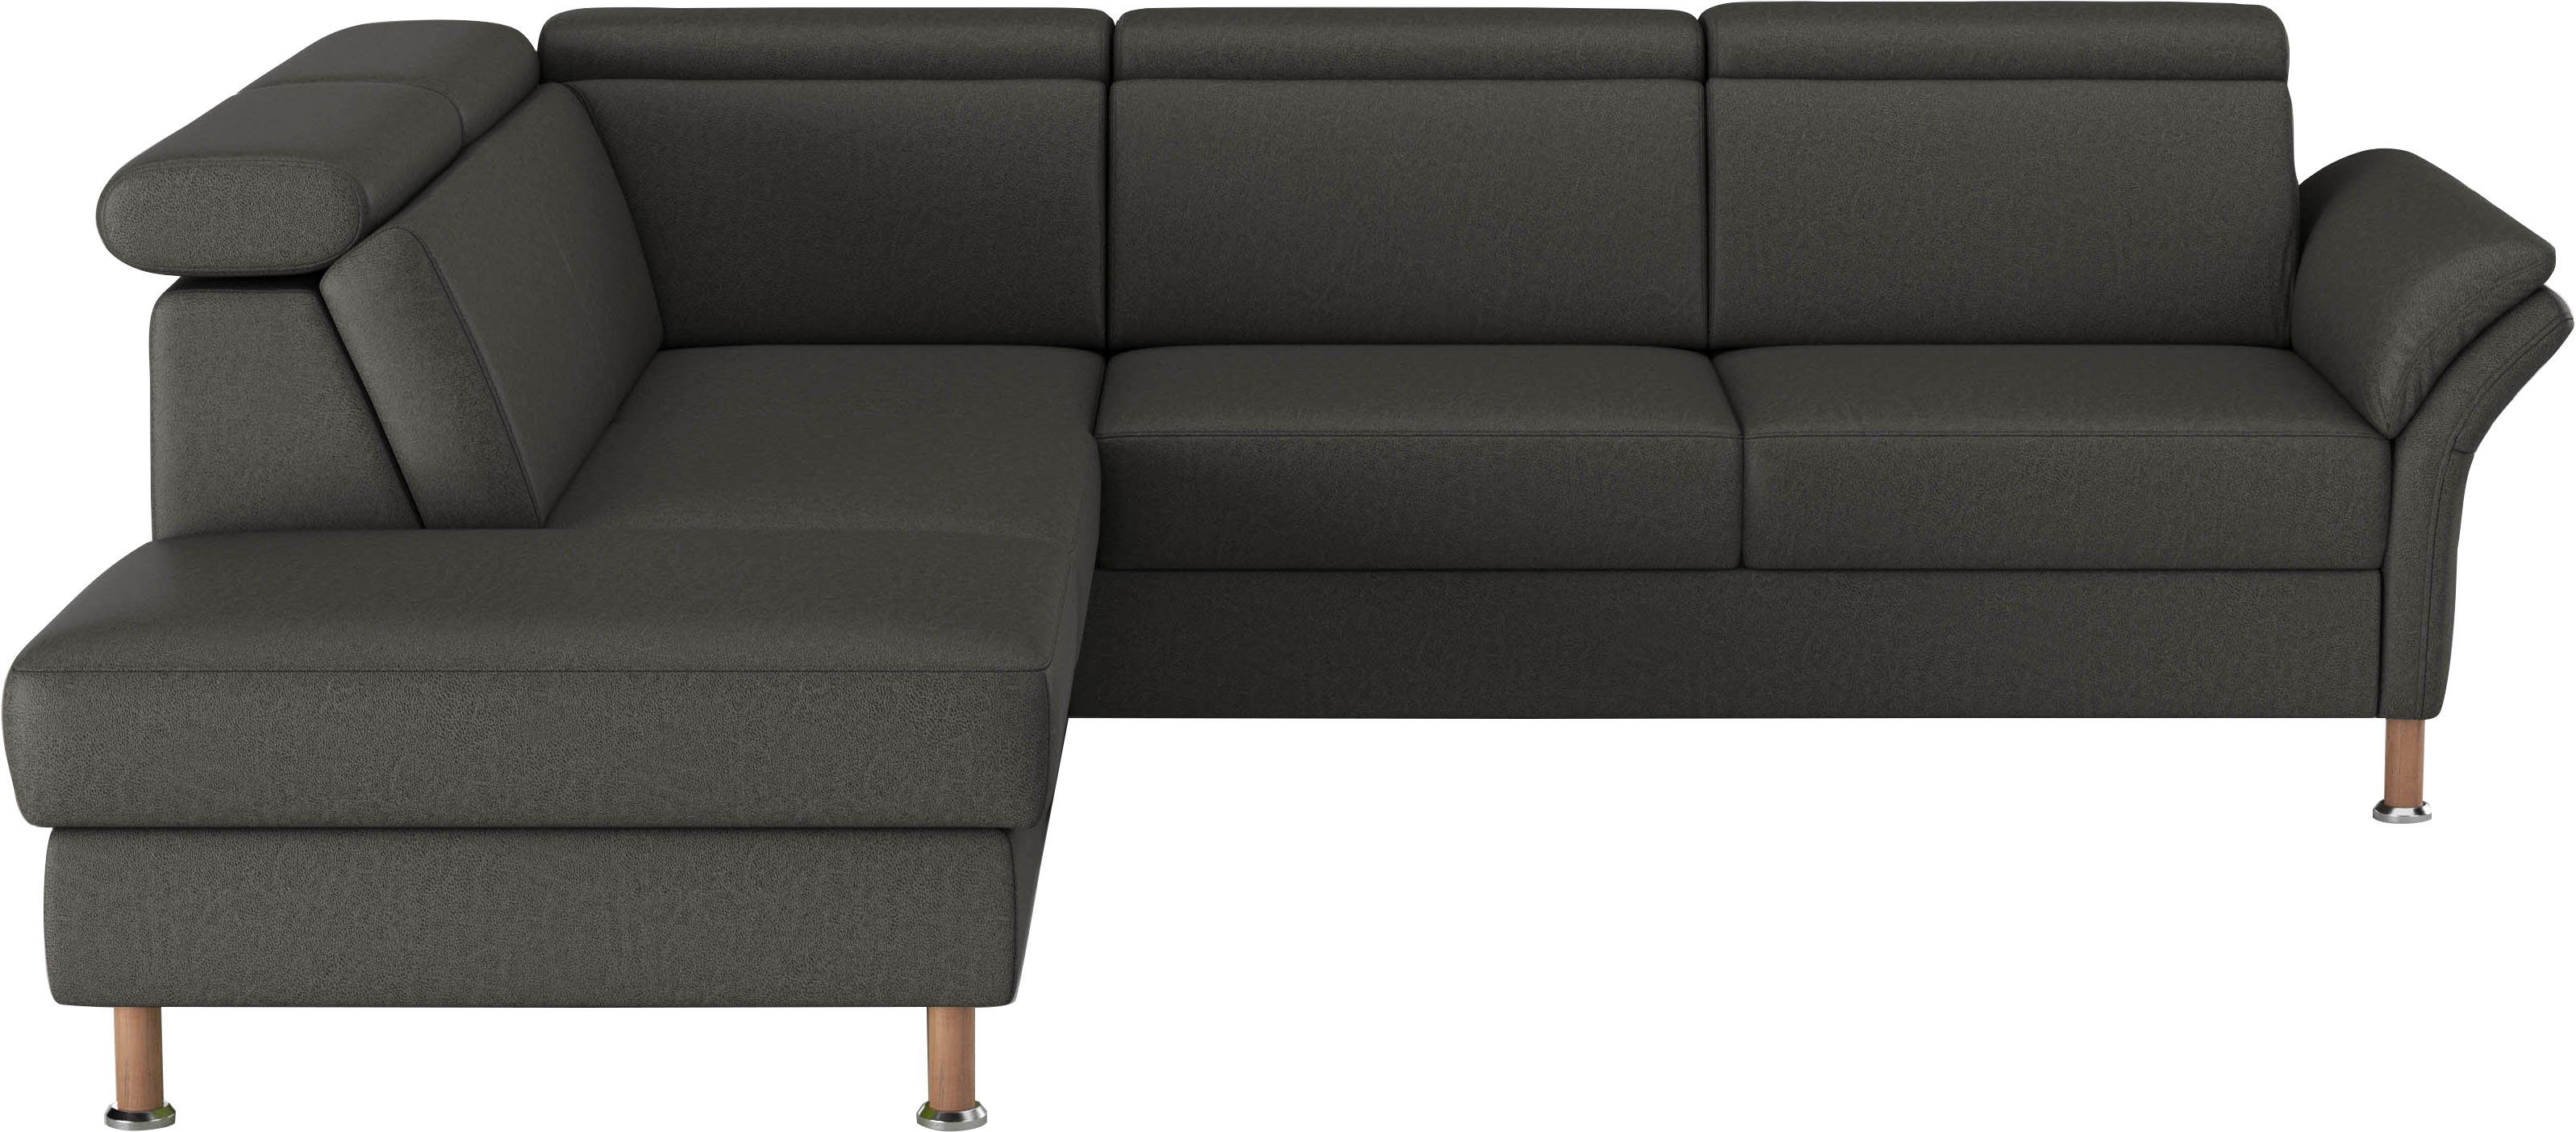 Home affaire Ecksofa Calypso, im 2,5- mit Relaxfunktion motorisch Sitzer Sofa